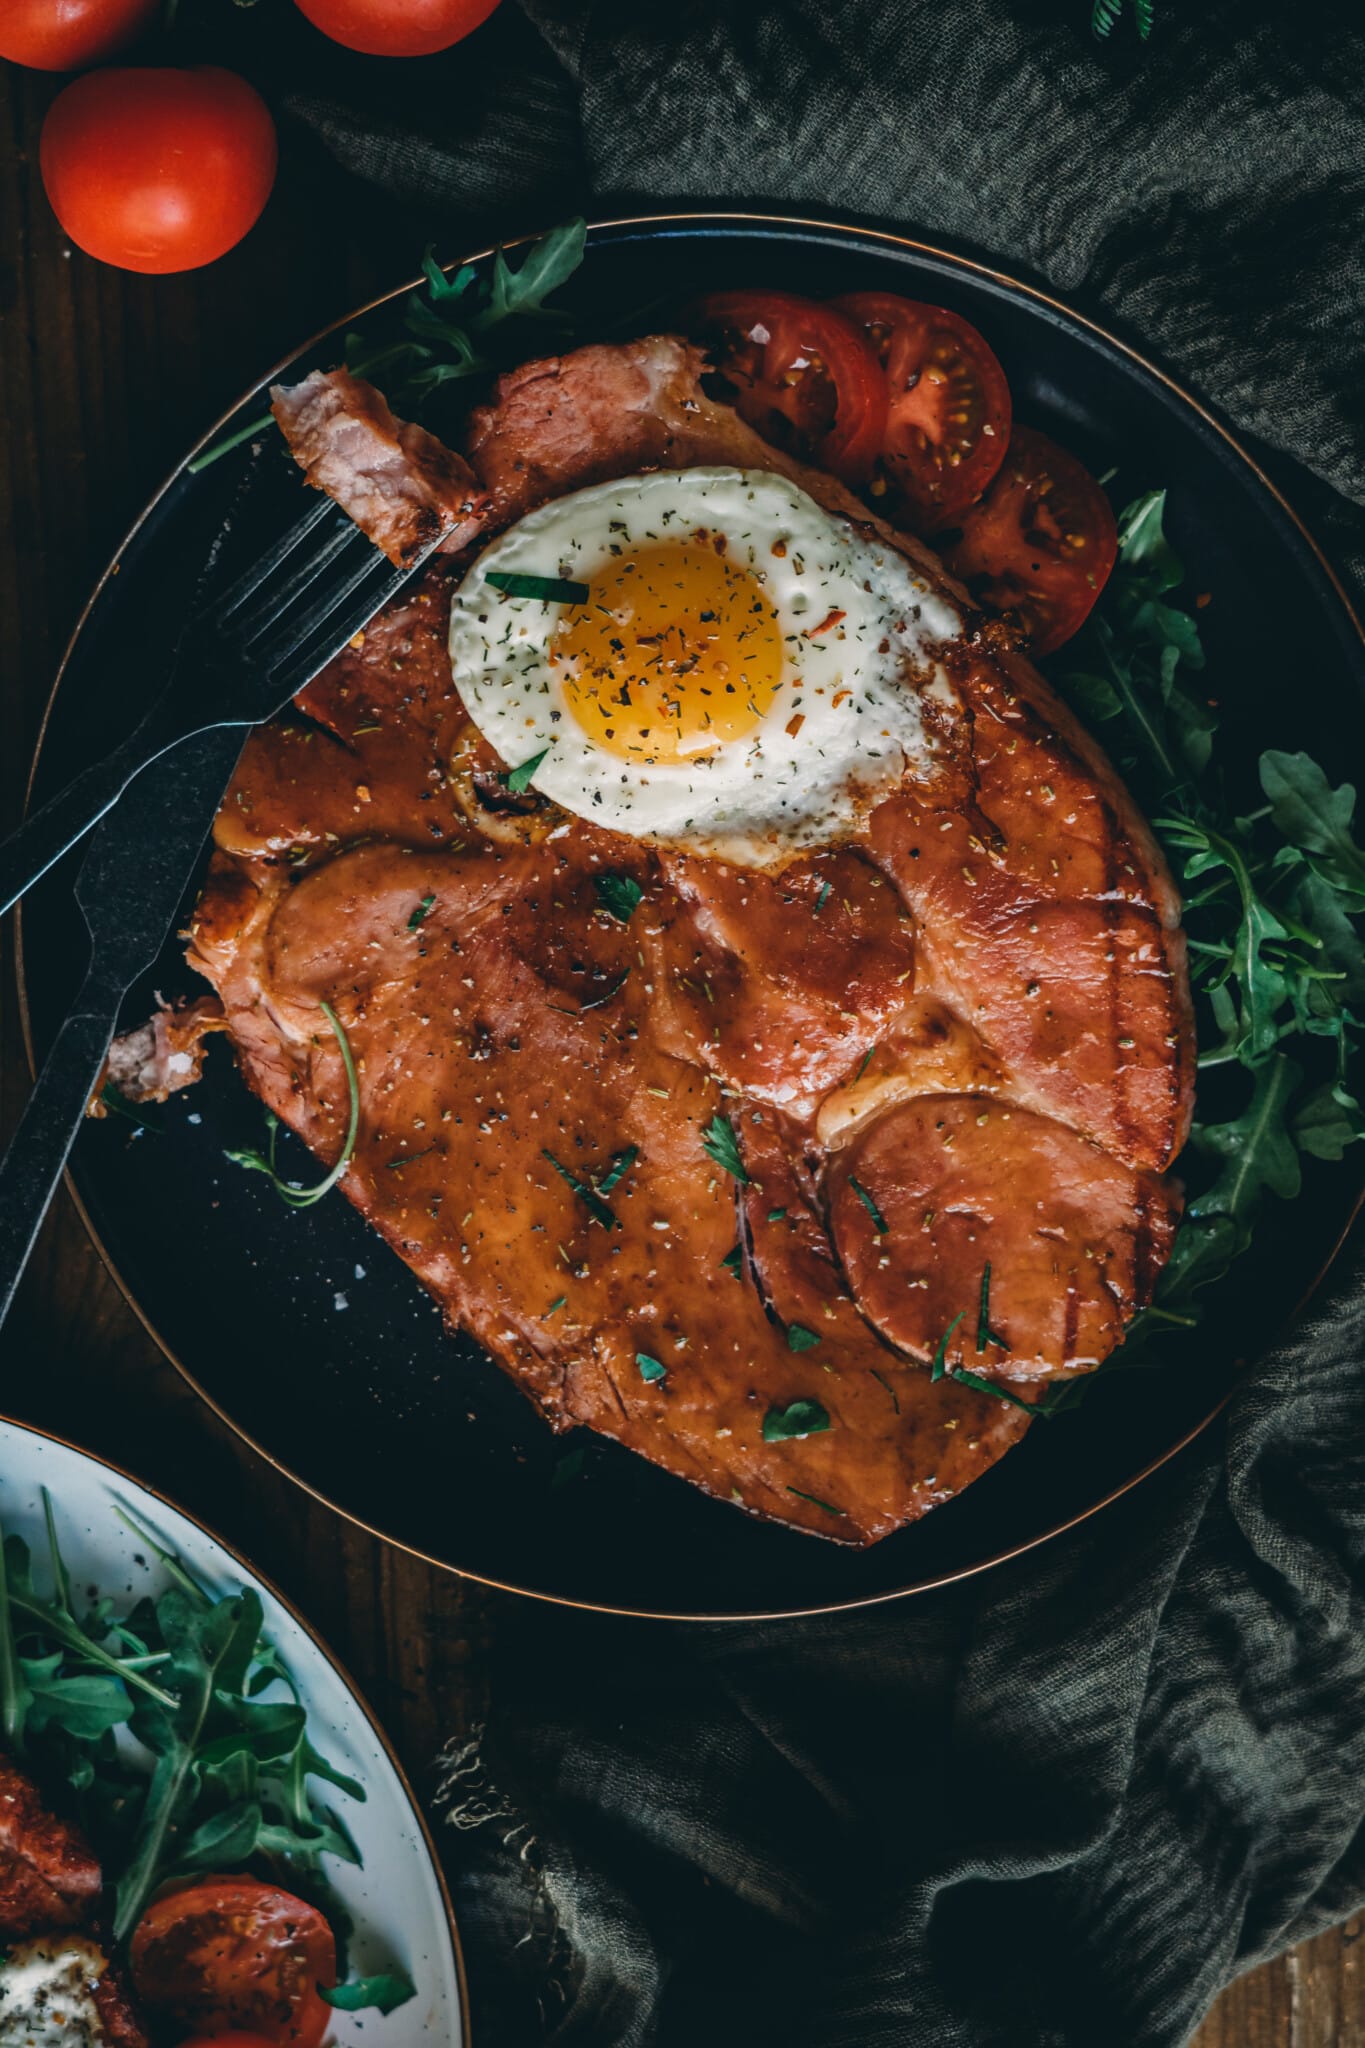 Overhead image of a glazed ham steak and fried egg.